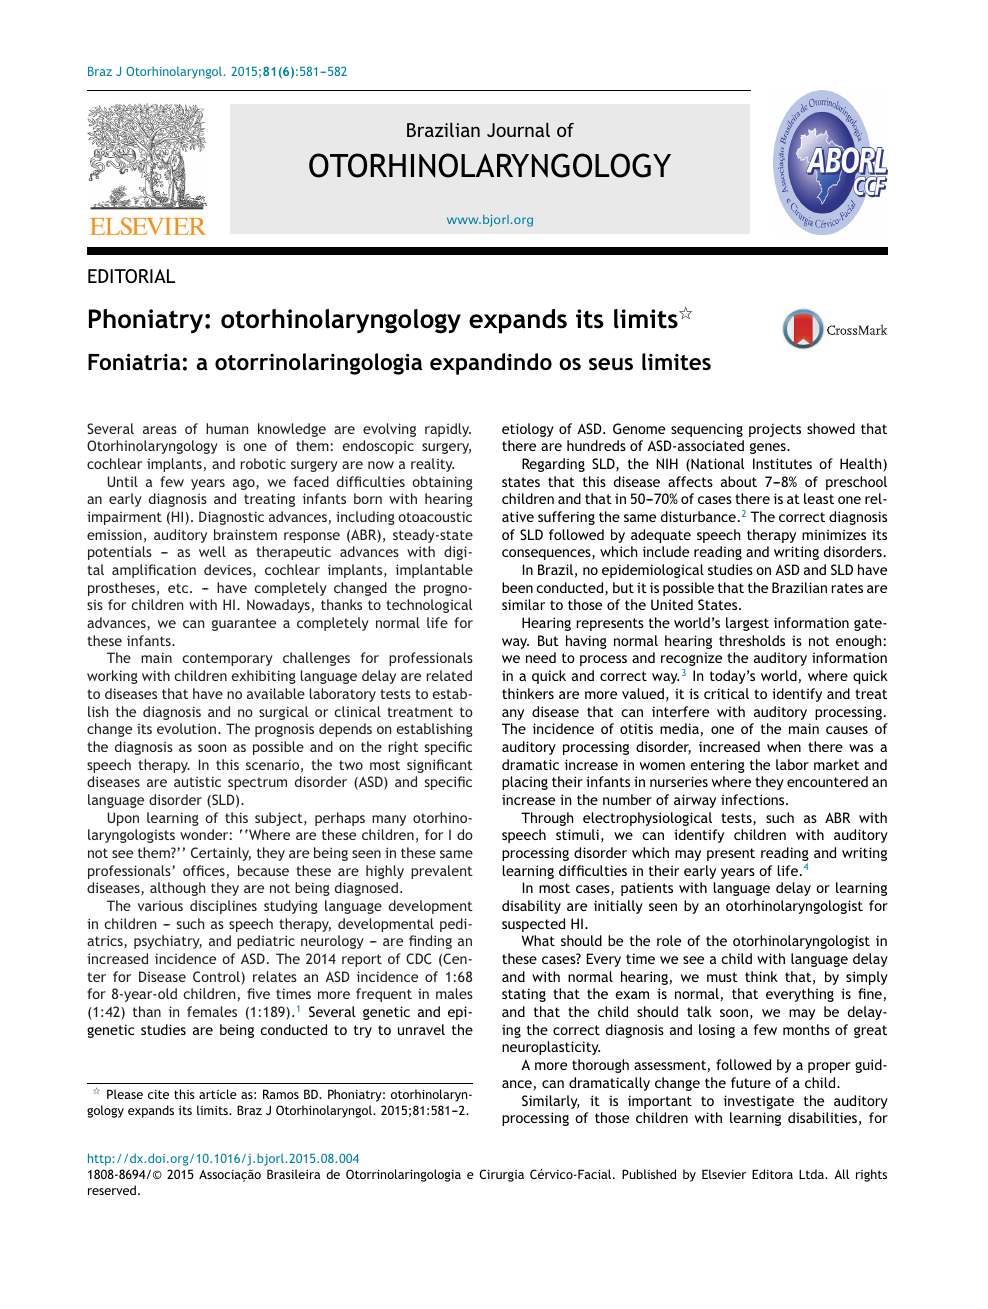 BJORL - Brazilian Journal of Otorhinolaryngology